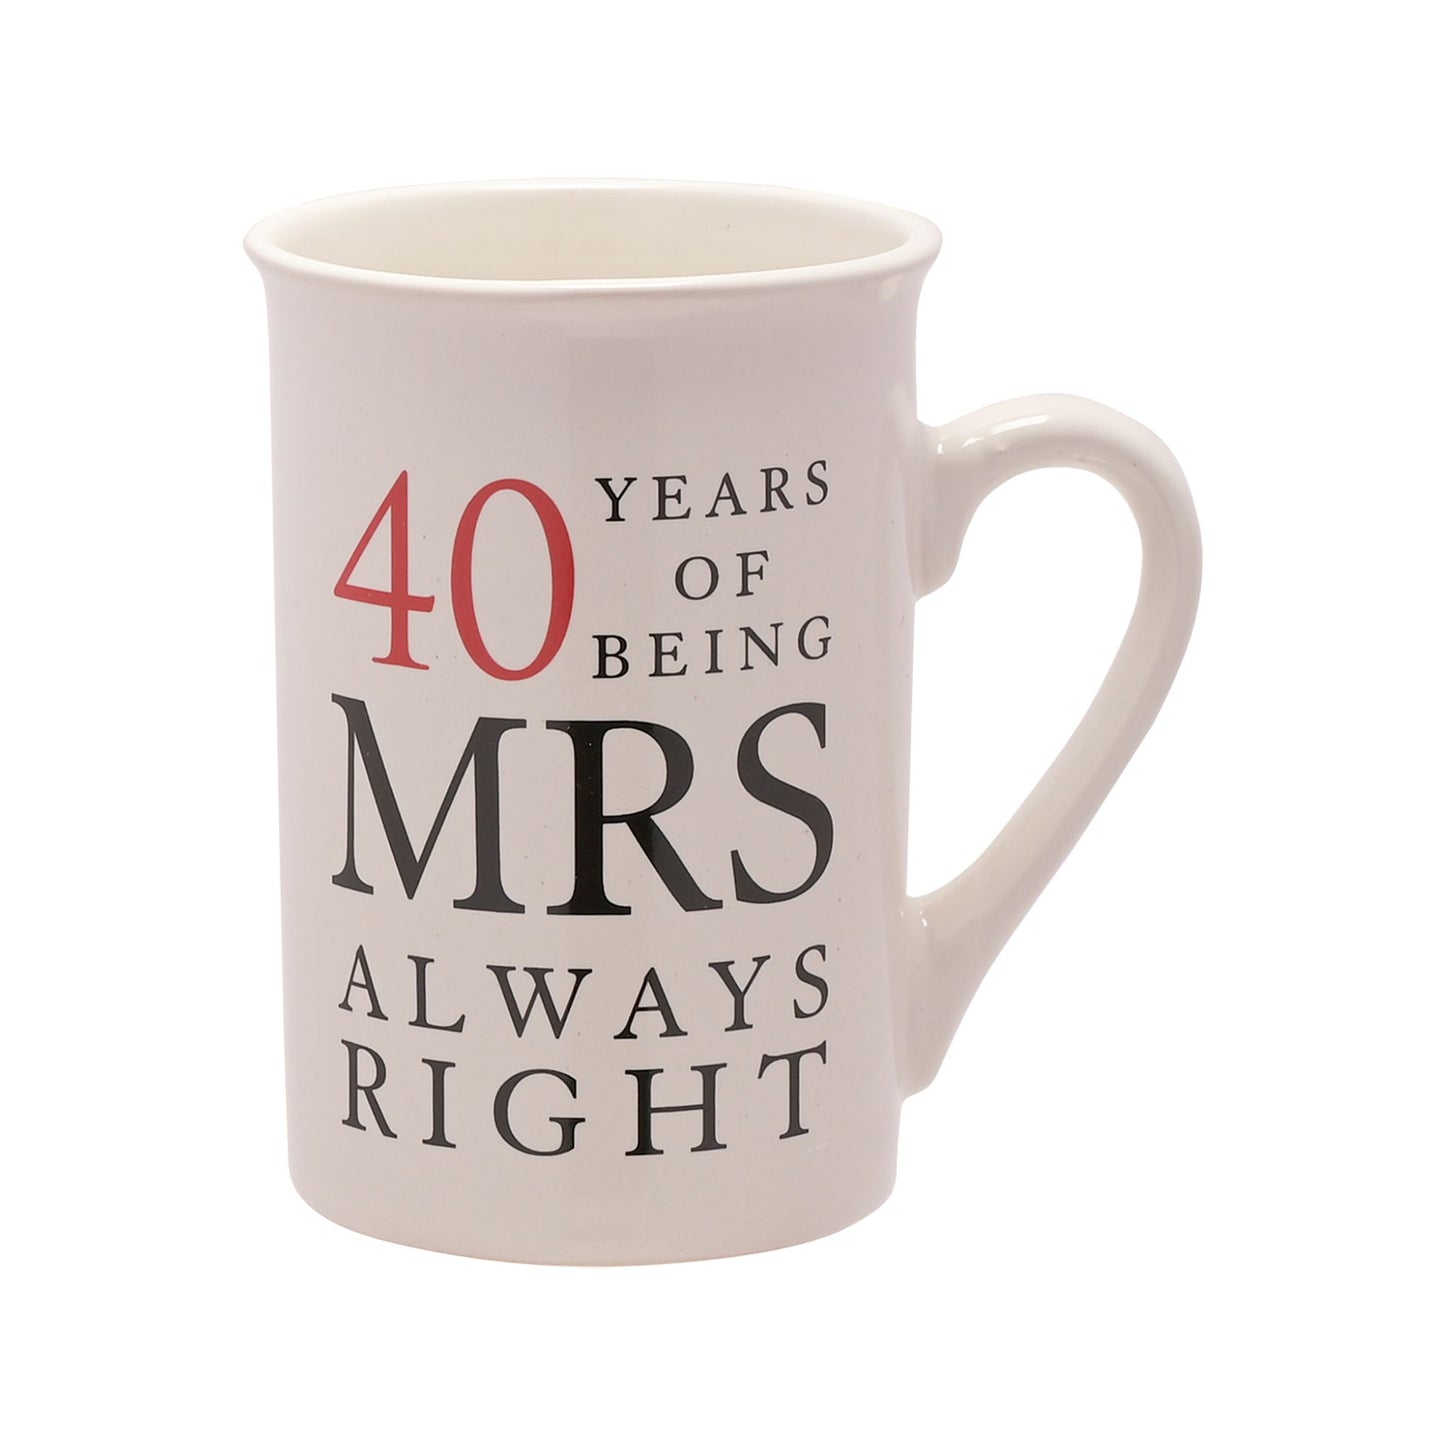 40th Wedding Anniversary Mugs - "Mr Right & Mrs Always Right"